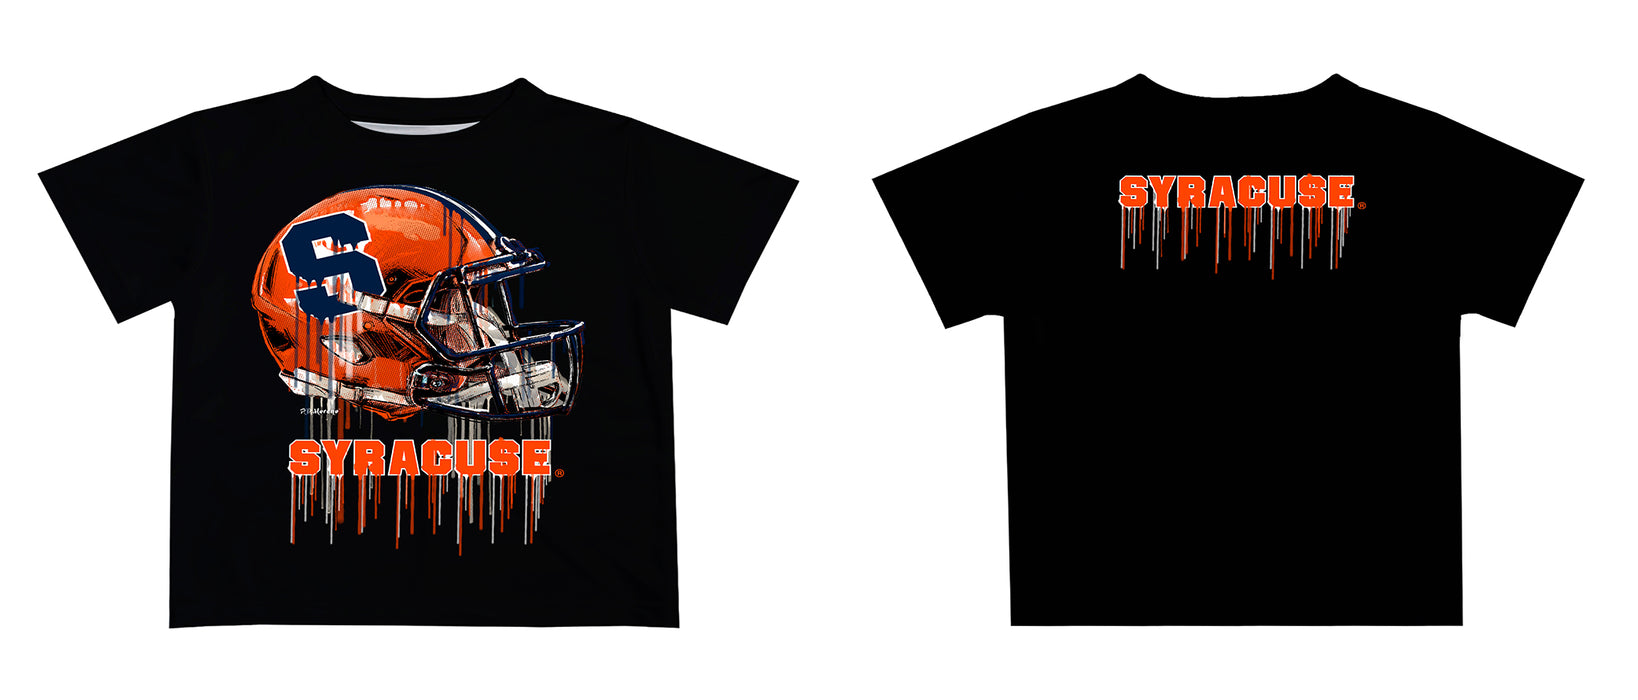 Syracuse Orange Original Dripping Football Helmet T-Shirt by Vive La Fete - Vive La Fête - Online Apparel Store